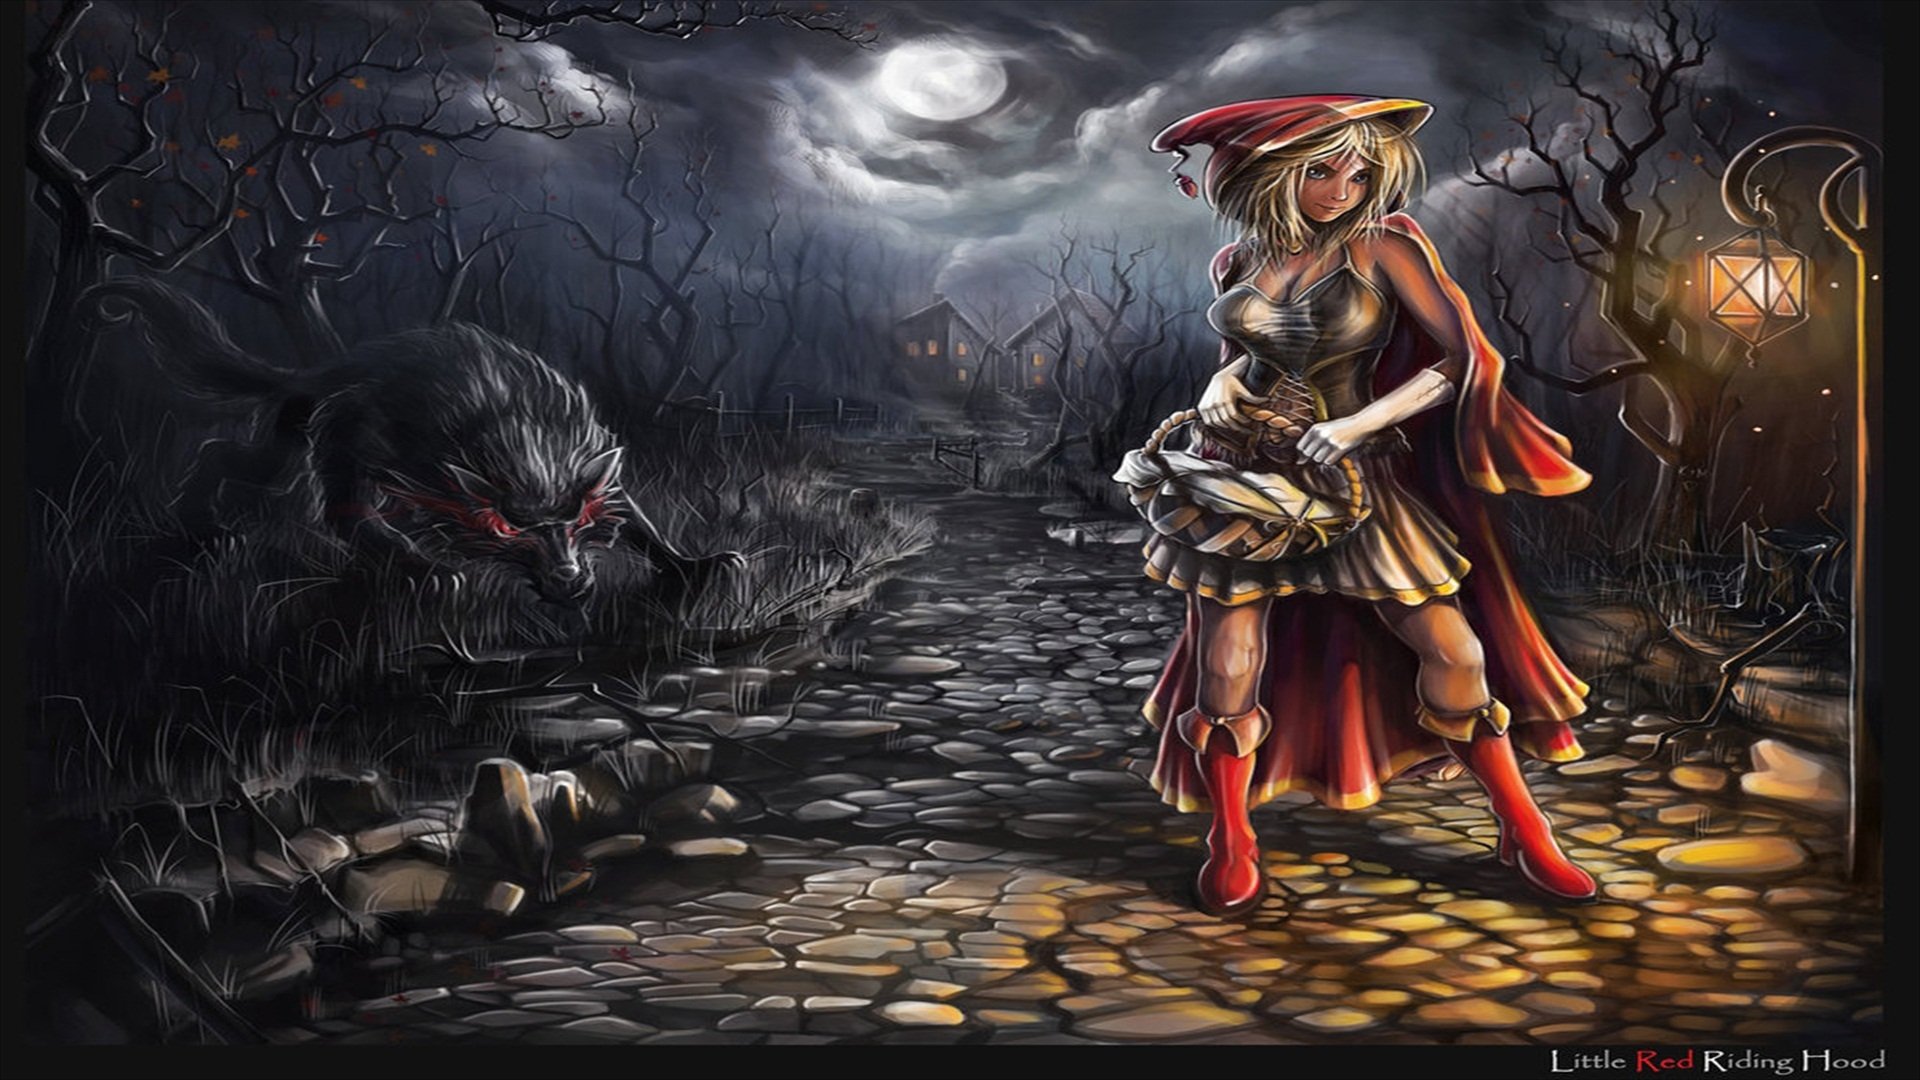 red riding hood wallpaper,action adventure game,cg artwork,art,darkness,mythology